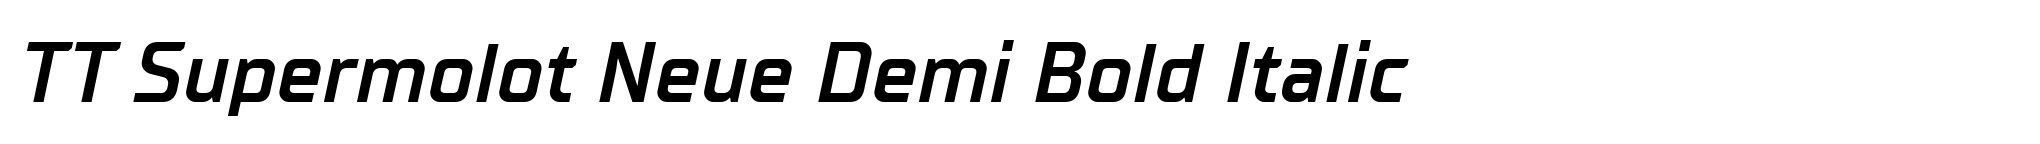 TT Supermolot Neue Demi Bold Italic image